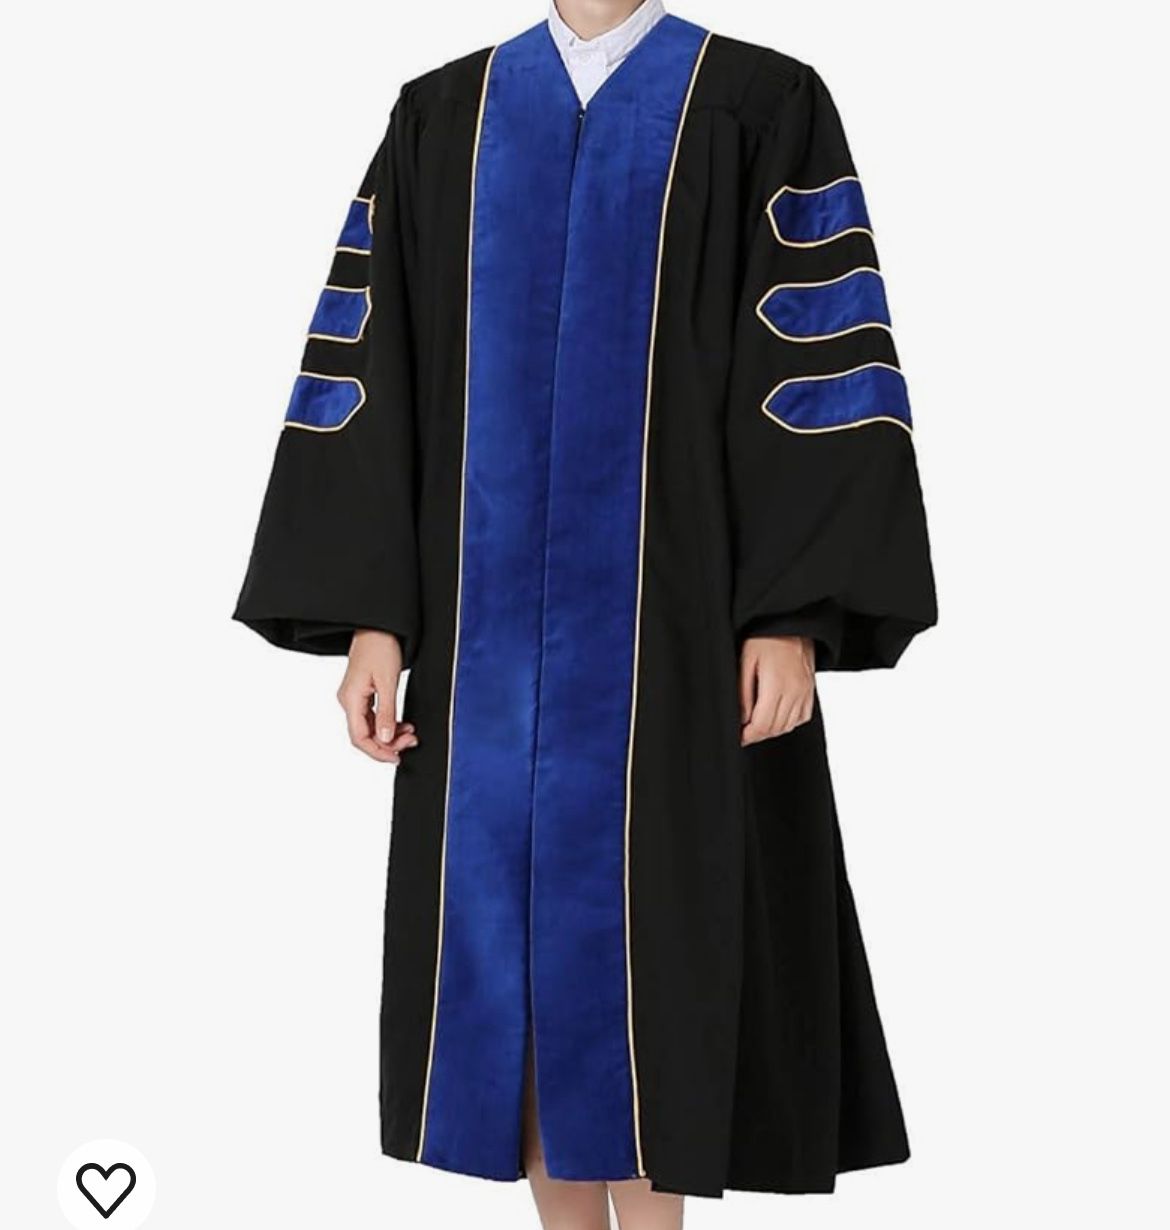 PhD Graduation Gown. Royal Blue